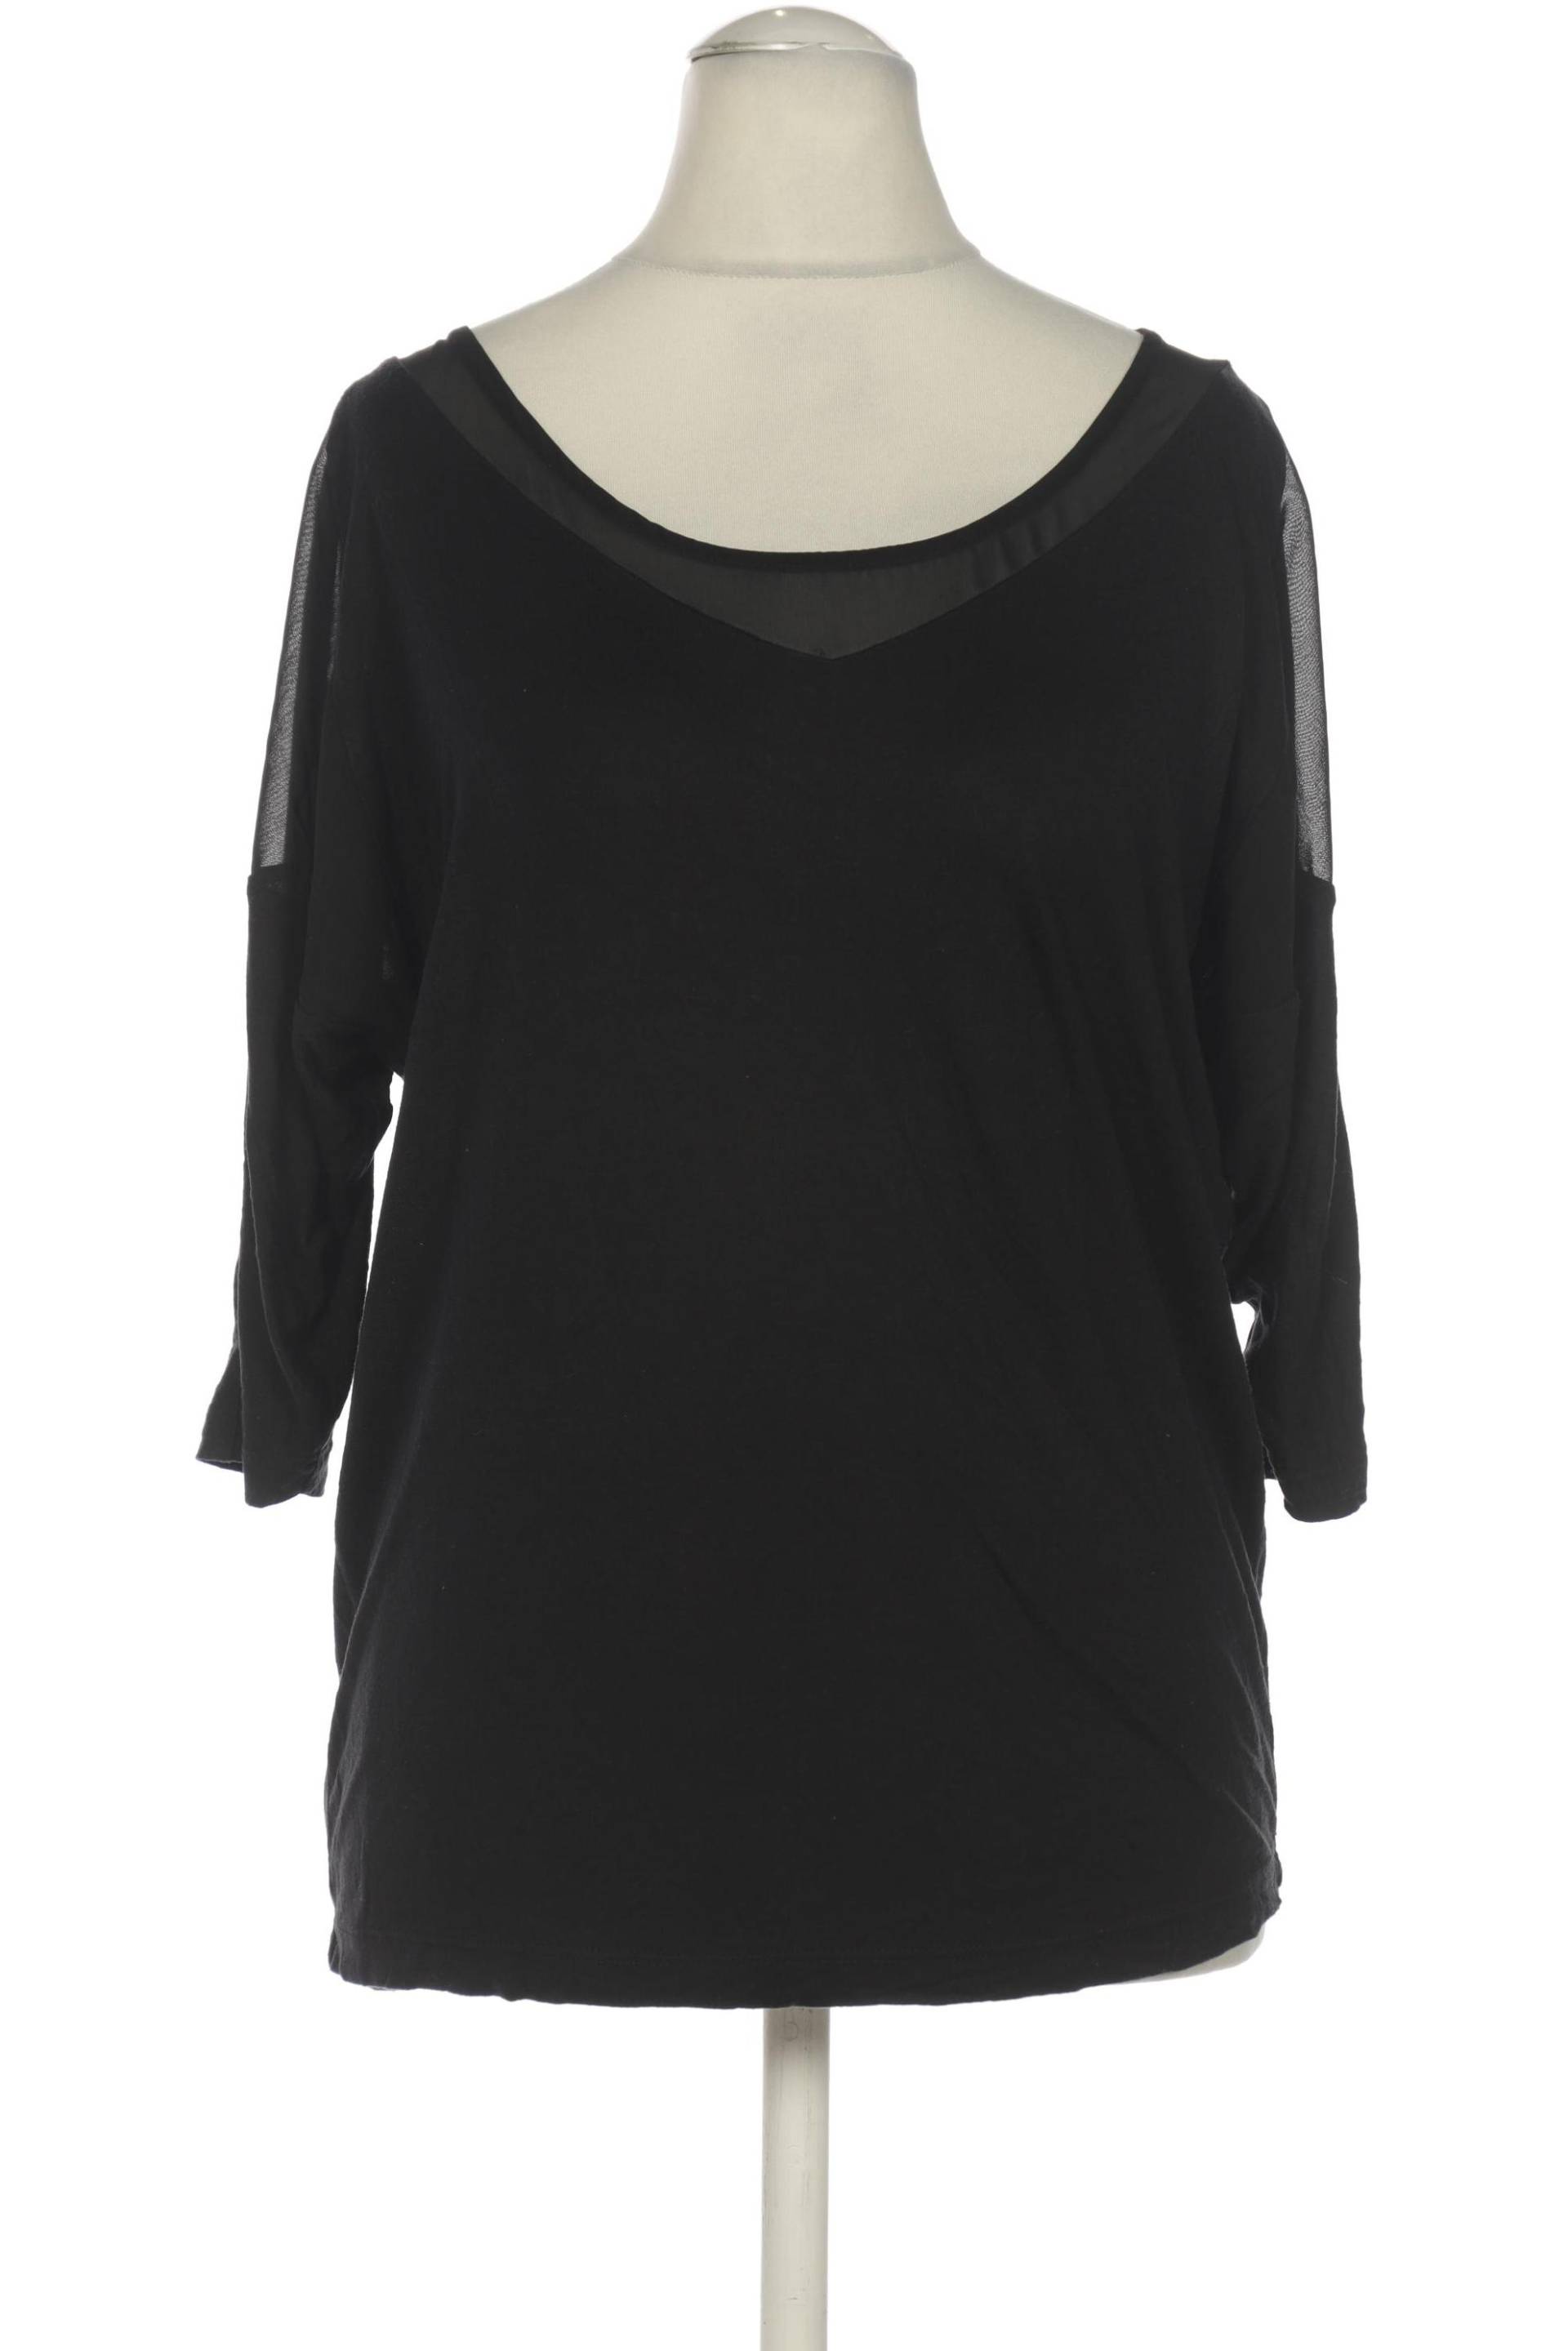 Modstroem Damen T-Shirt, schwarz, Gr. 36 von Modstroem